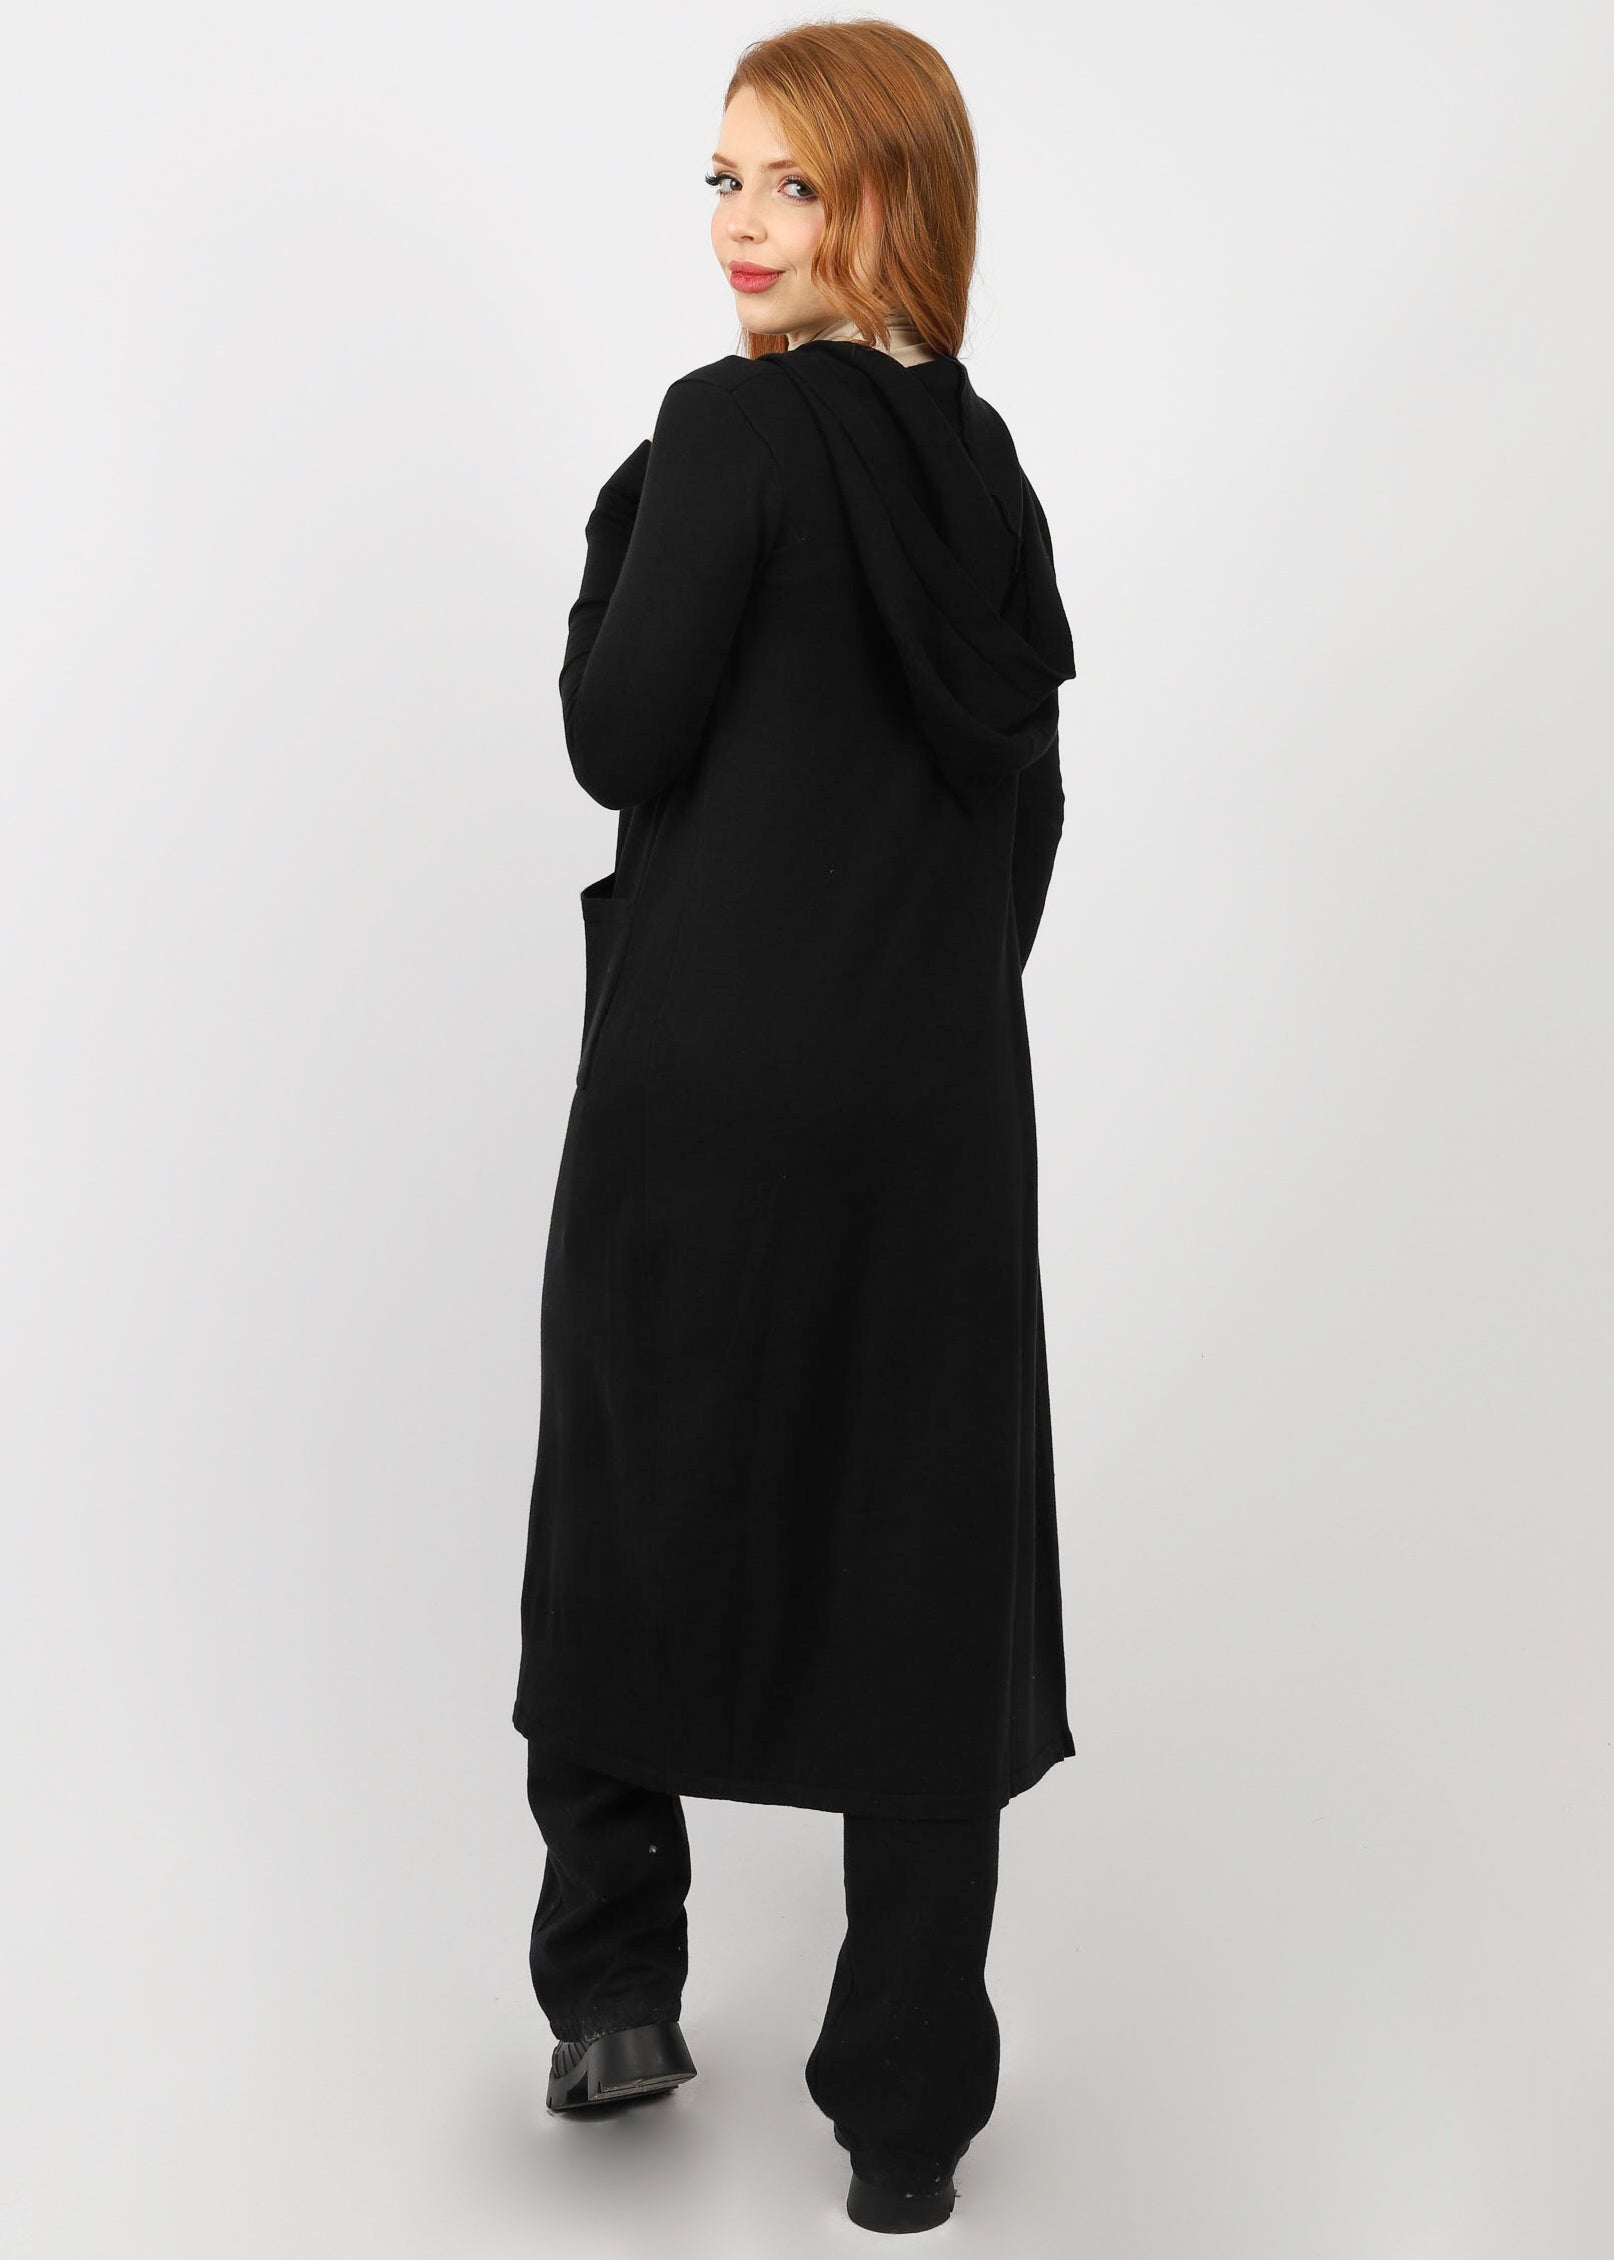 7905-Black-cardigan-knit